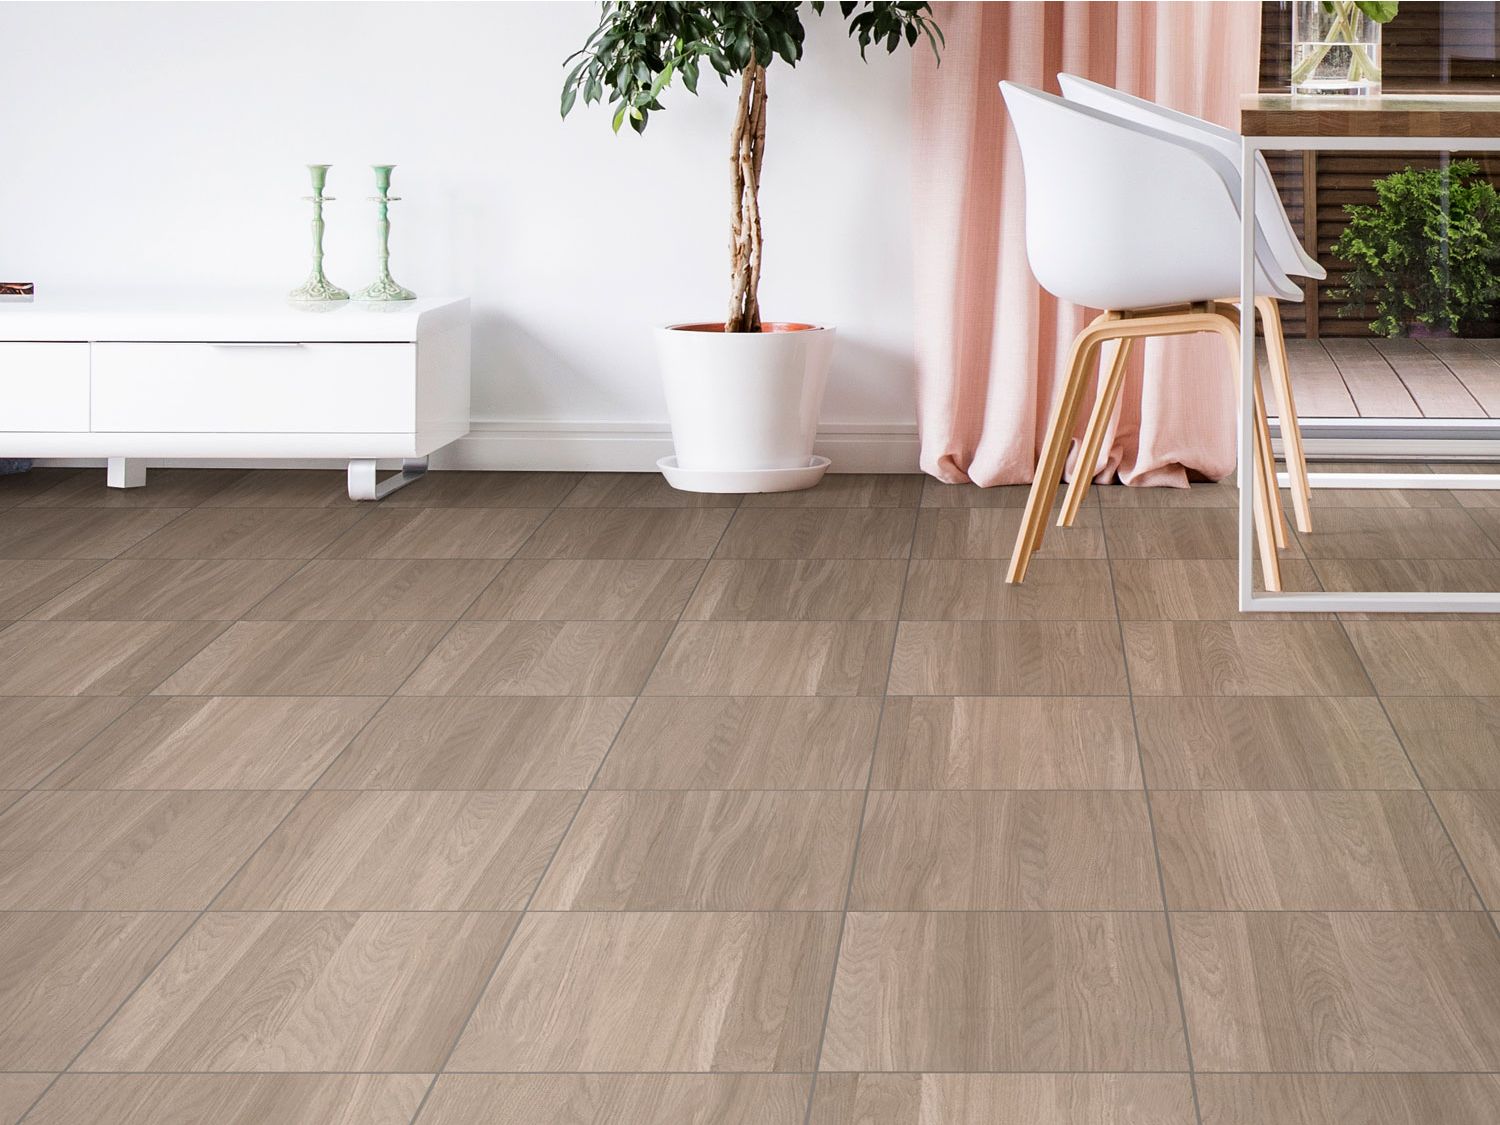 Kudos Wood Beige Matt Ceramic Floor Tile - 350 x 350mm